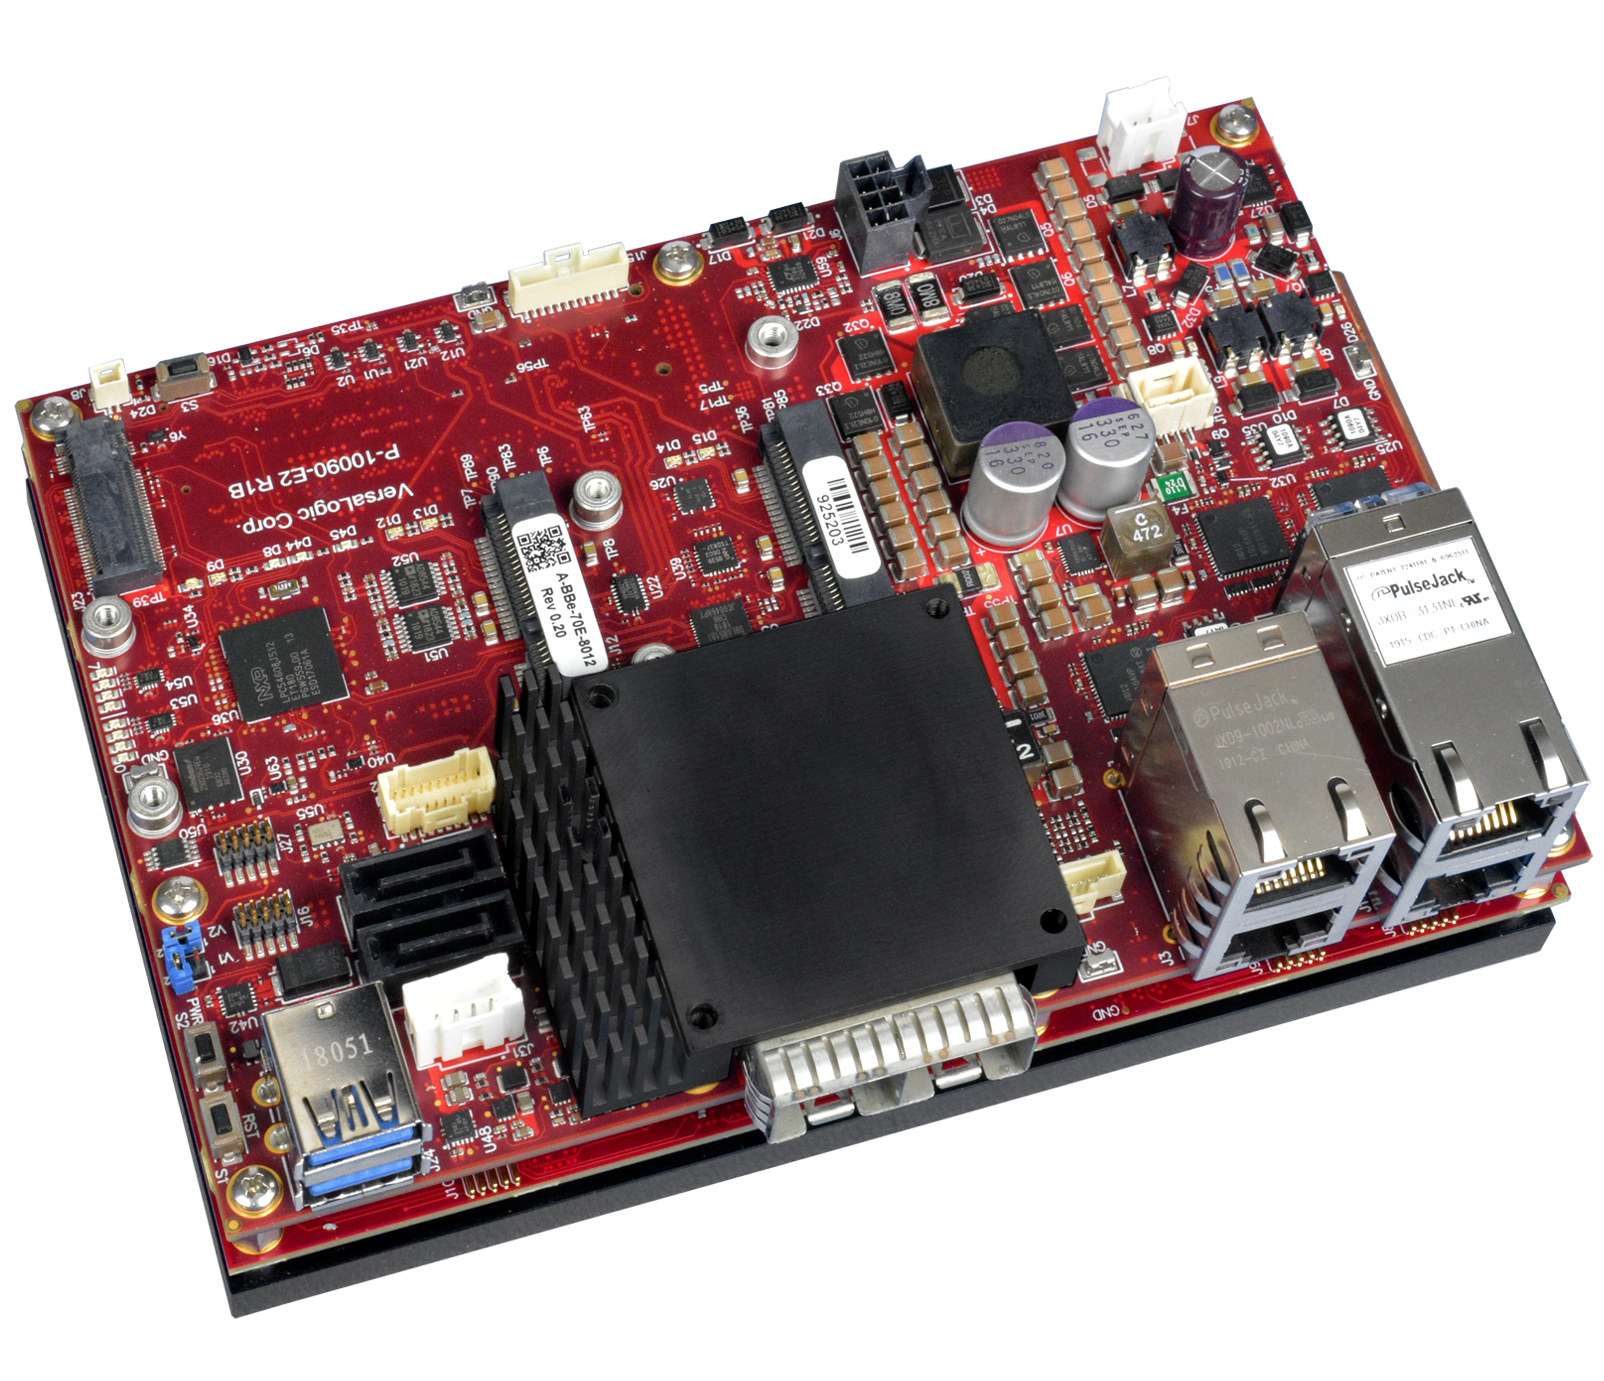 Cpu 16 cores. Серверные платы GSM. IX-200 embedded Computer. Intel Atom Server Board. Intel Atom embedded.